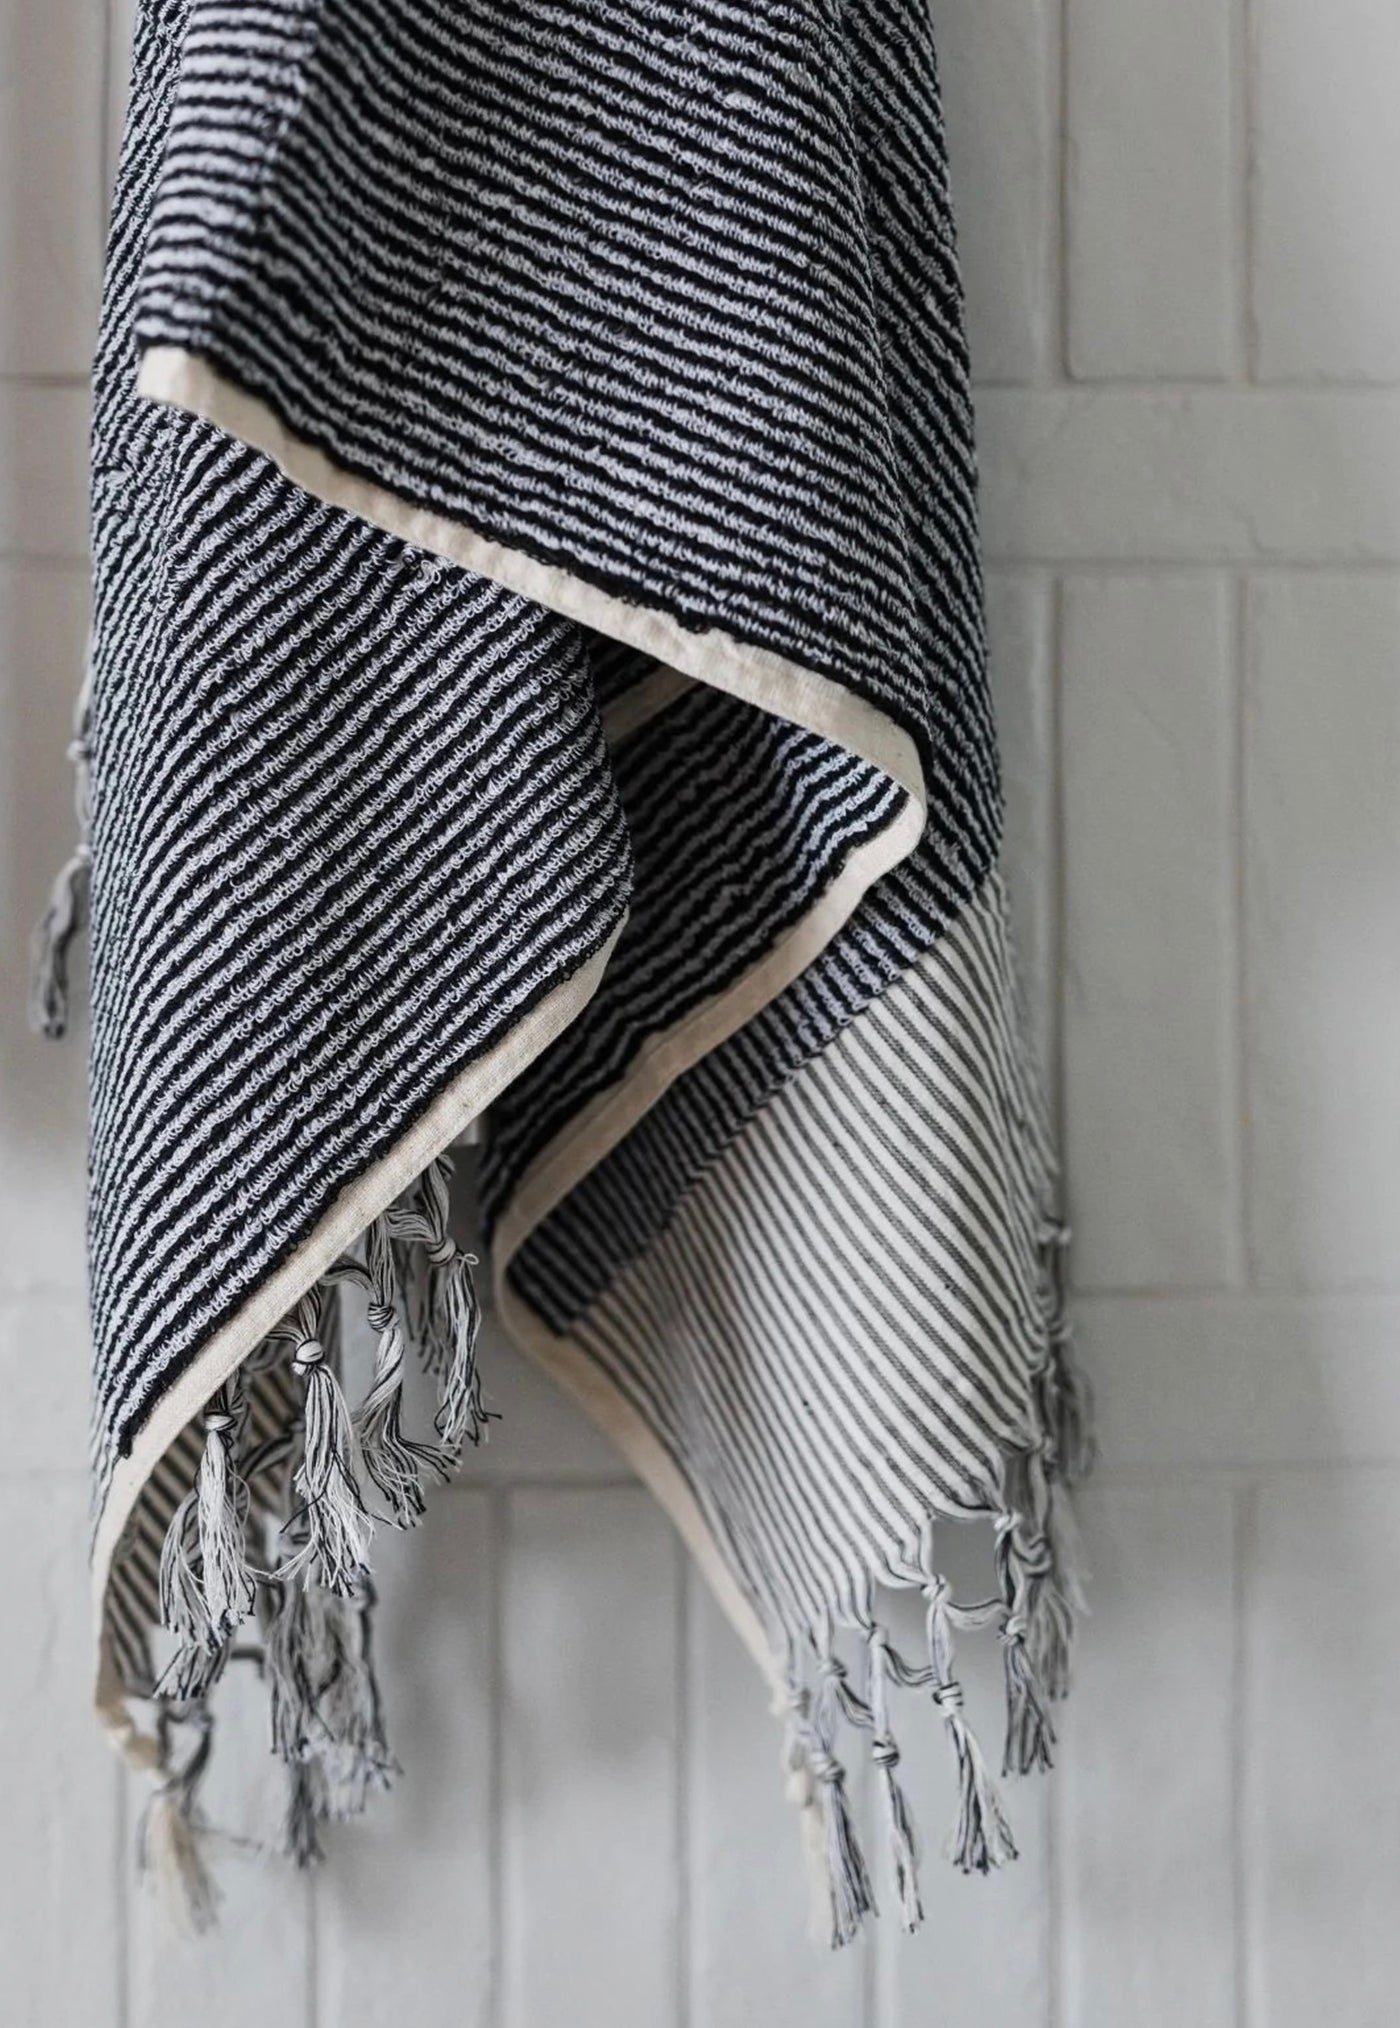 Milan Organic Bath Towel - Black Stripe sold by Angel Divine